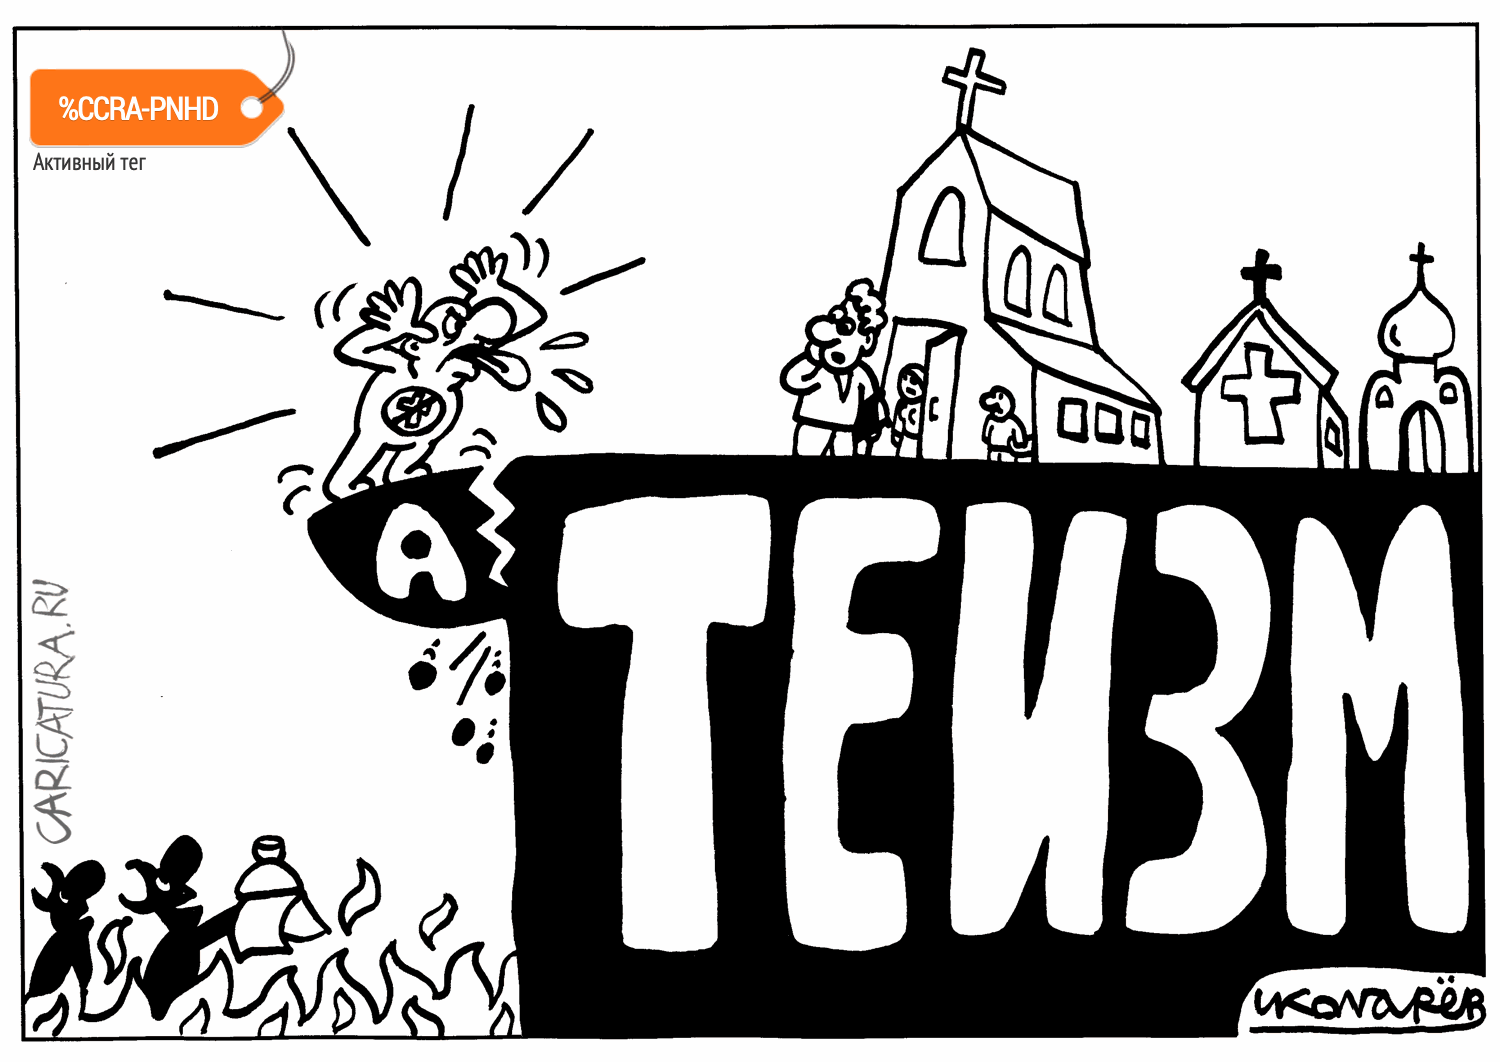 Карикатура "К чему ведёт атеизм", Игорь Колгарев